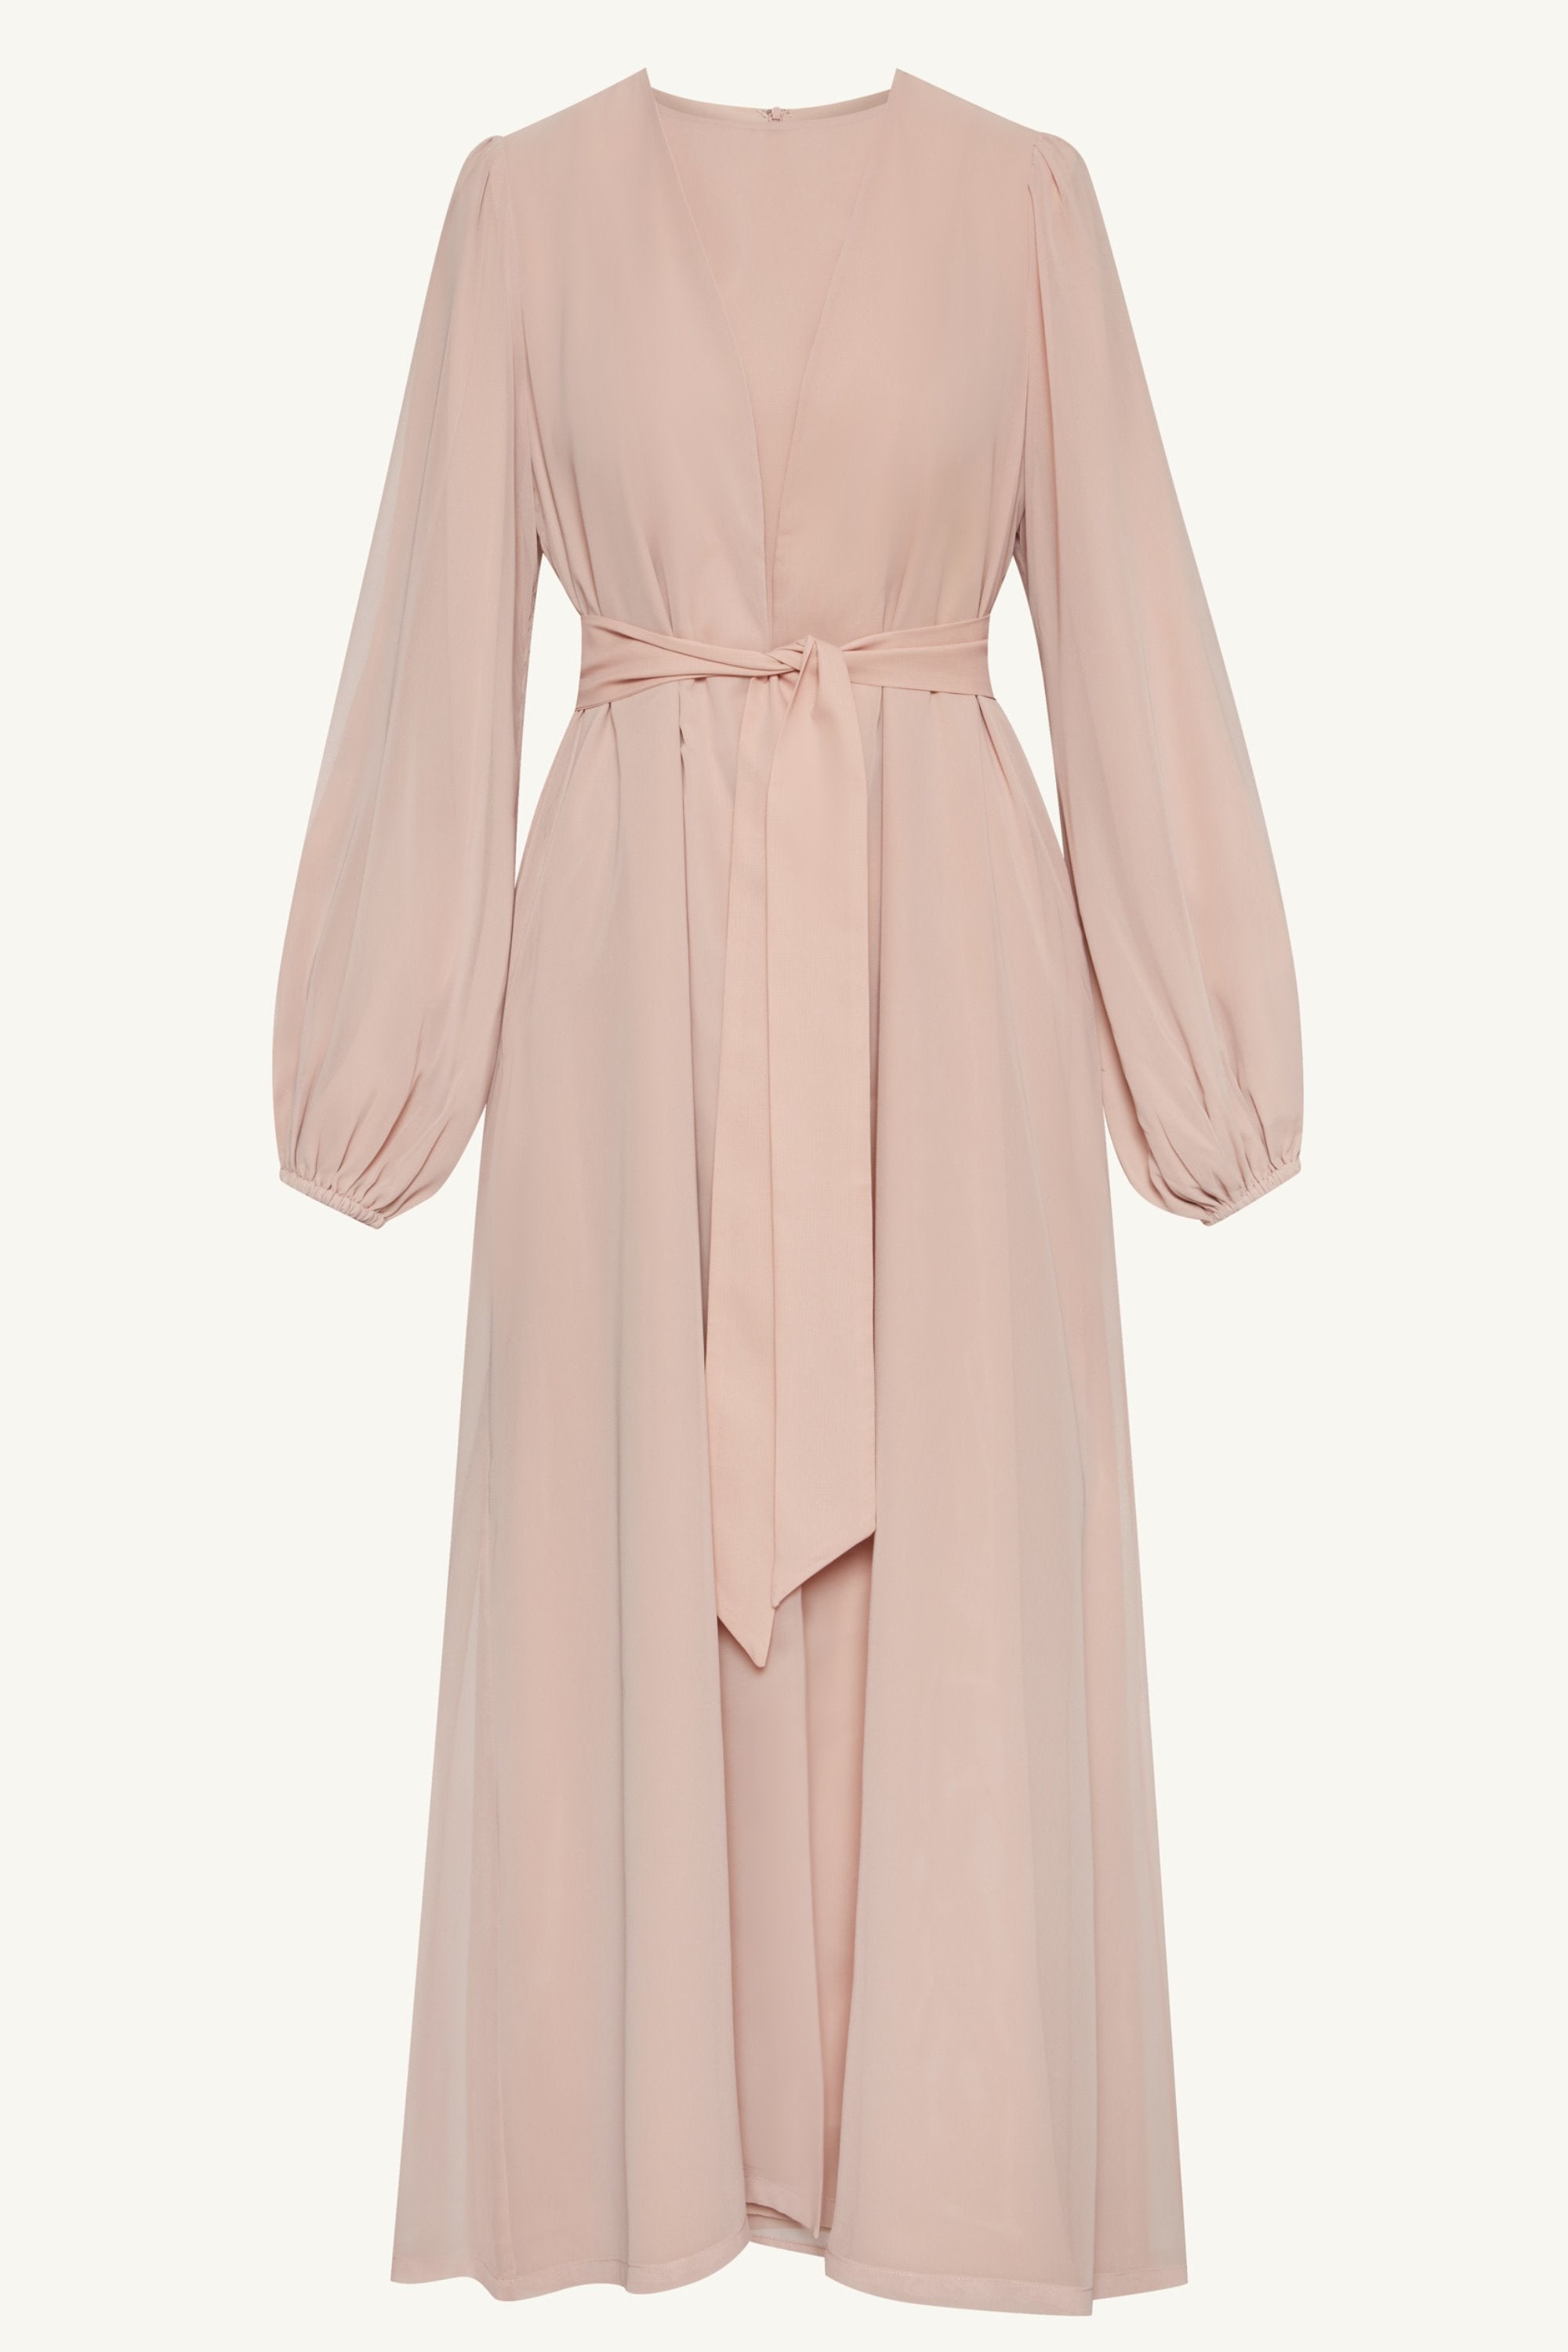 Najma Chiffon Abaya & Dress Set - Jasmine Pink Clothing Veiled 